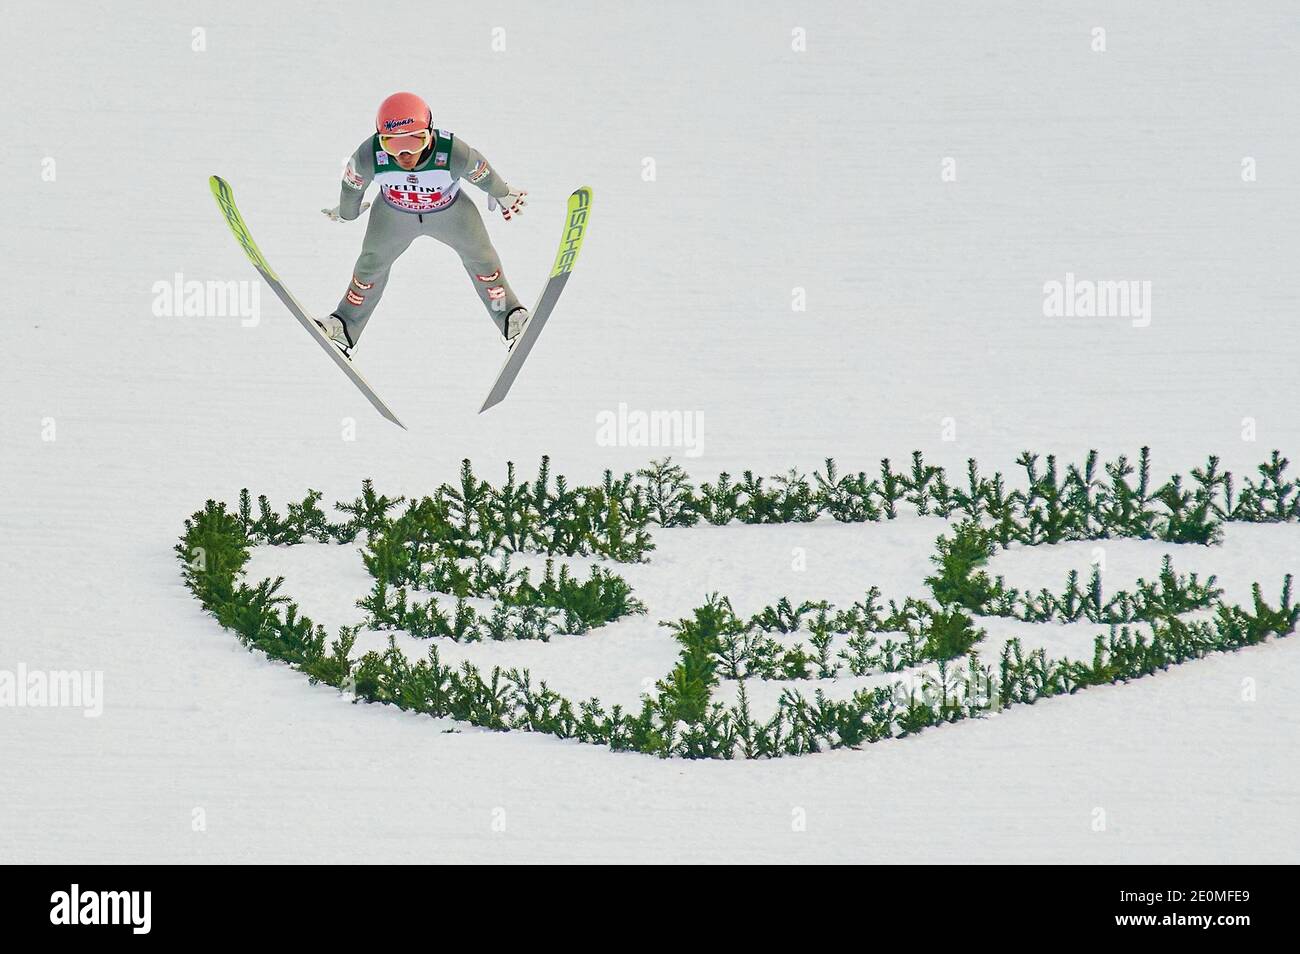 Daniel HUBER, AUT  in action at the Four Hills Tournament Ski Jumping at Olympic Stadium, Grosse Olympiaschanze in Garmisch-Partenkirchen, Bavaria, Germany, January 01, 2021.  © Peter Schatz / Alamy Live News Stock Photo